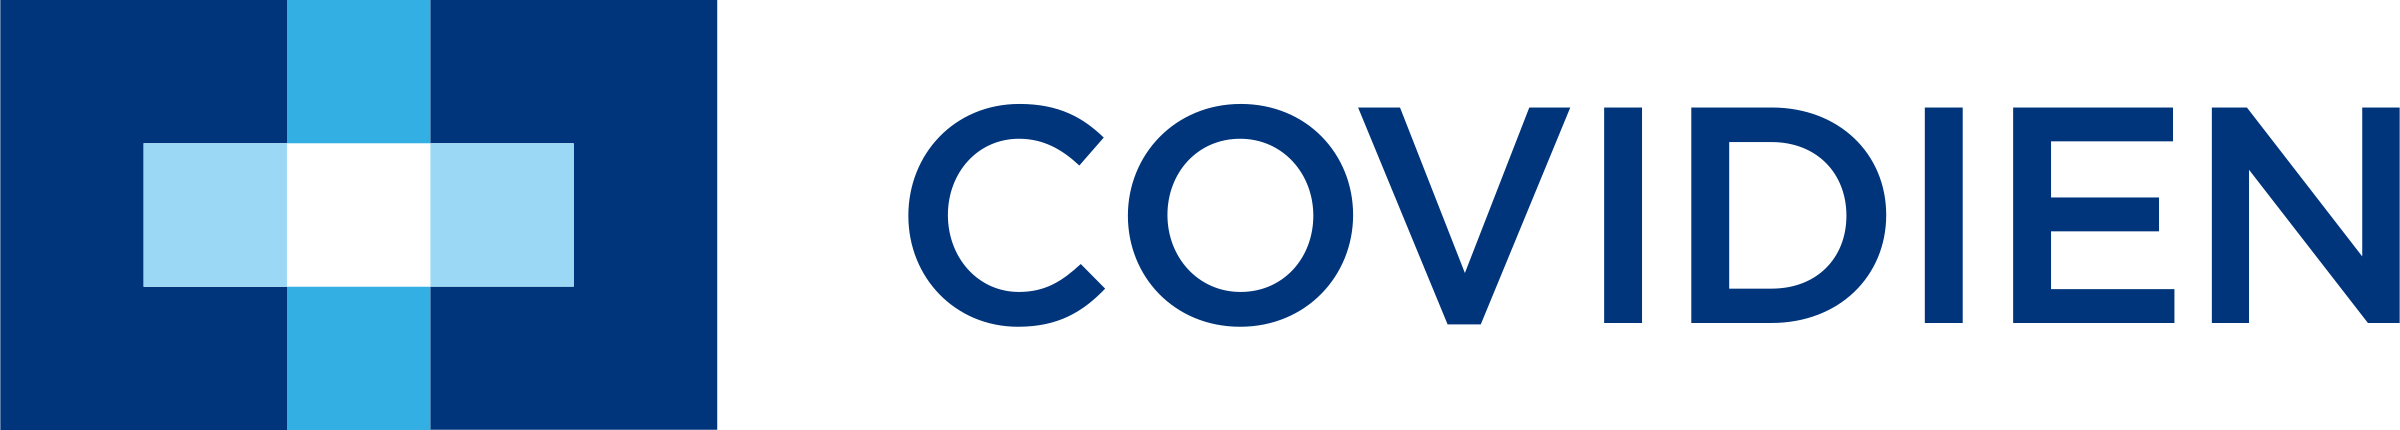 Covidien Logo - Covidien Logo PNG Transparent & SVG Vector - Freebie Supply